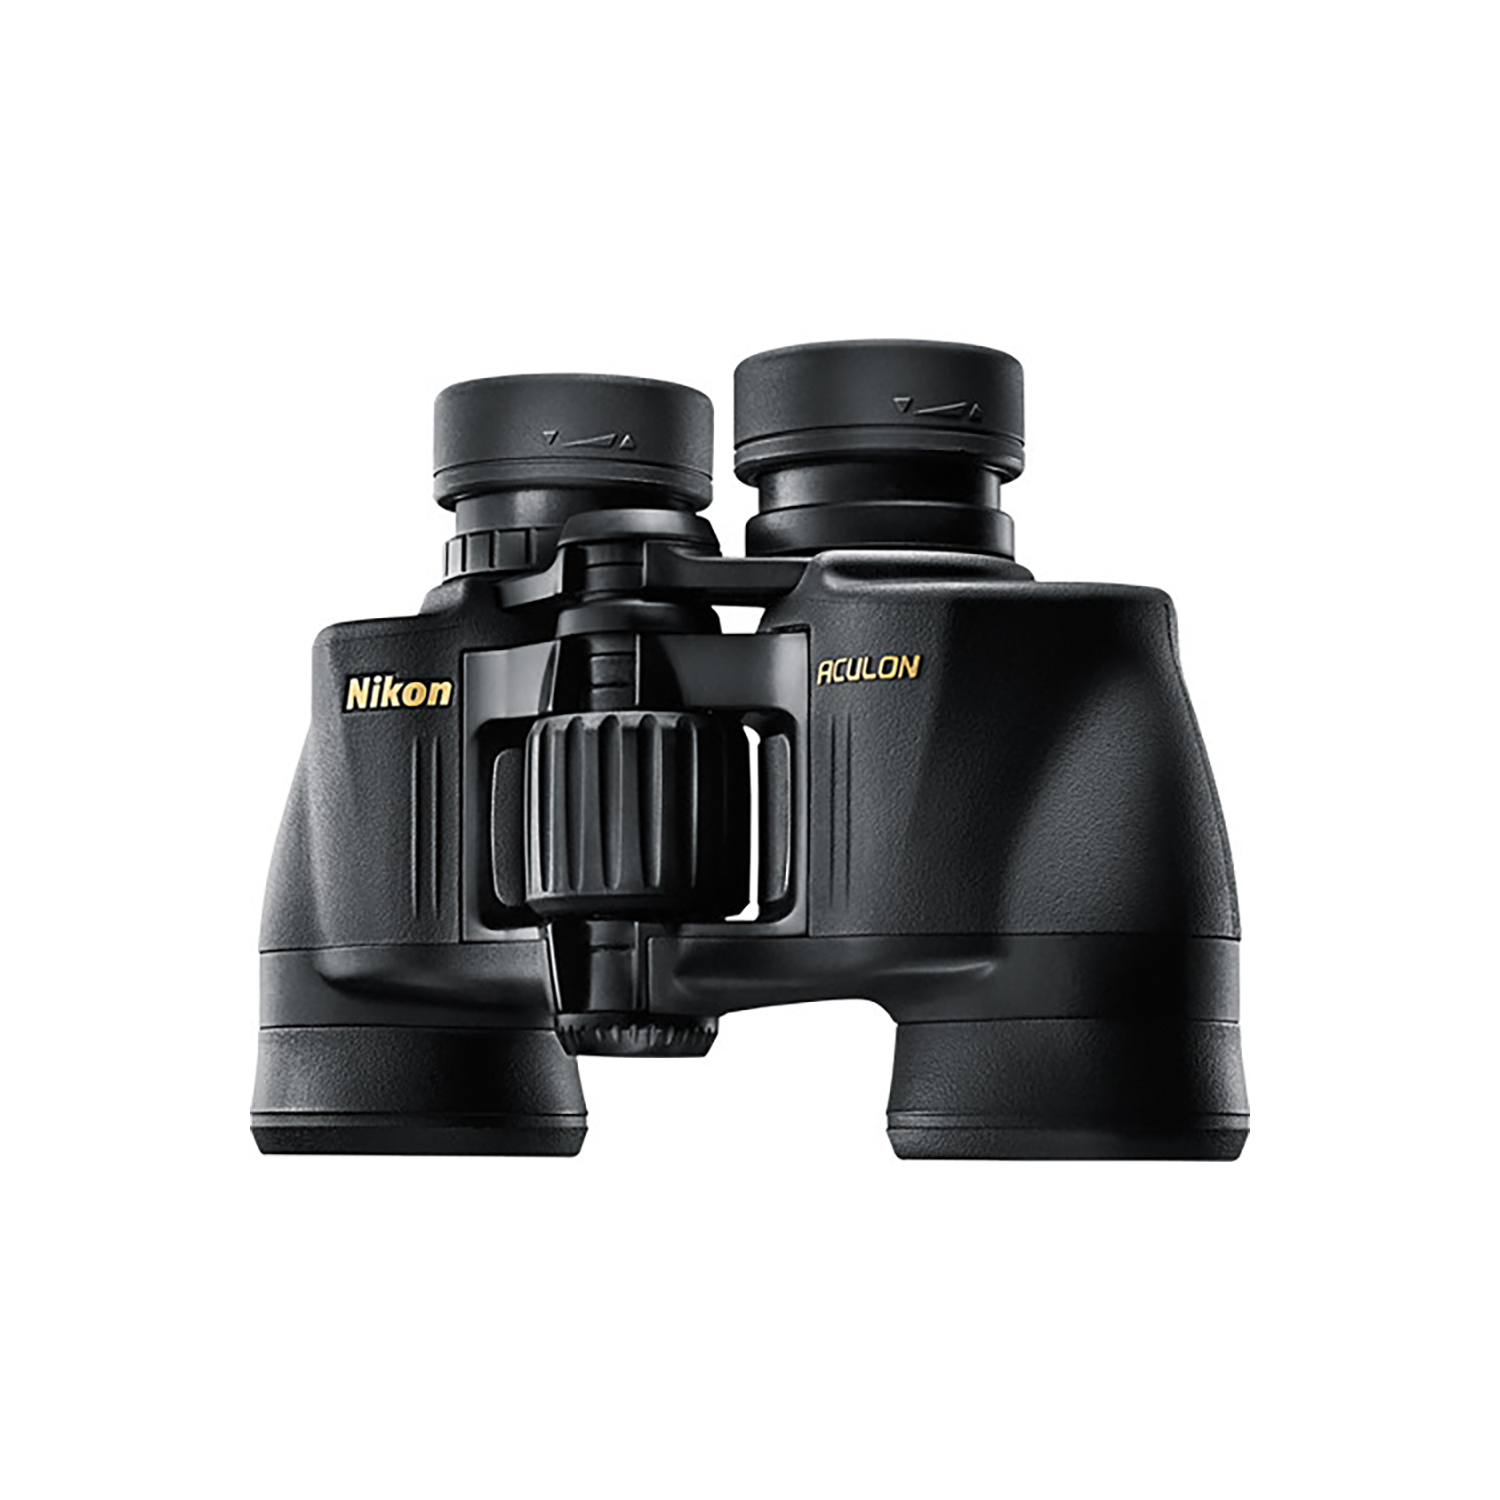 Binoculaires Nikon Aculon A211 7x35